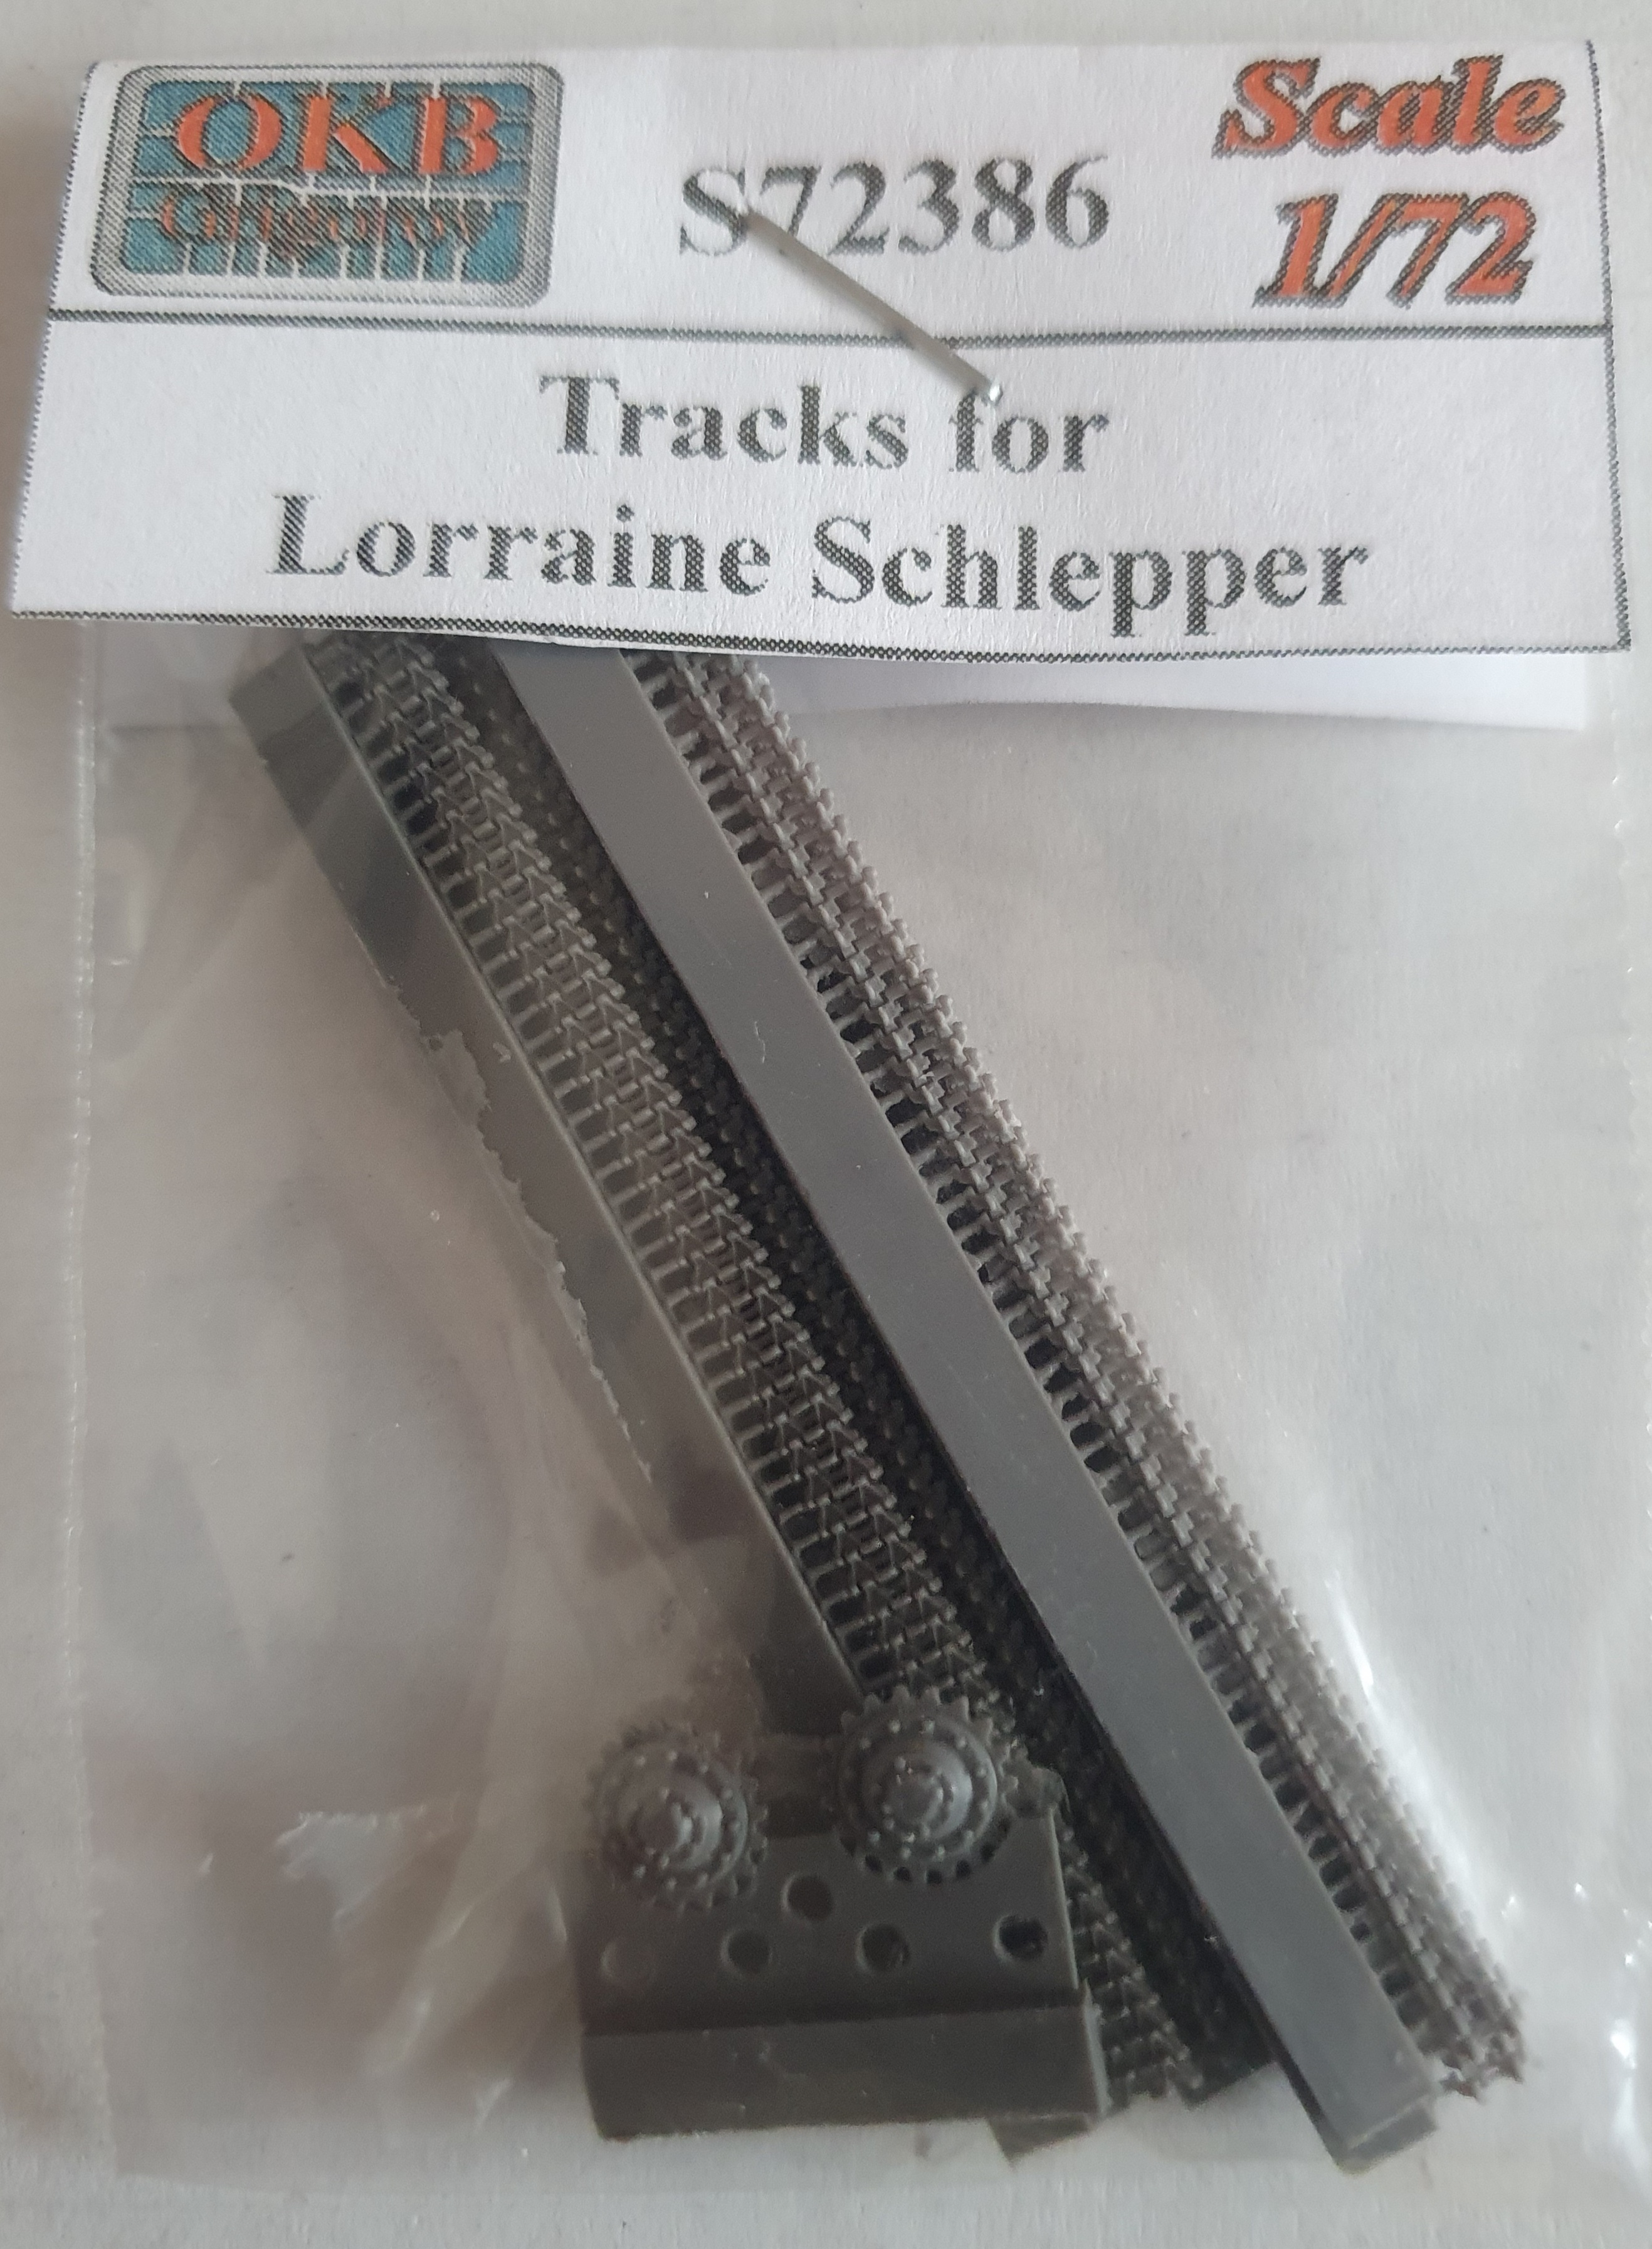 Lorraine 37/38L / Lorraine Schlepper (f) tracks